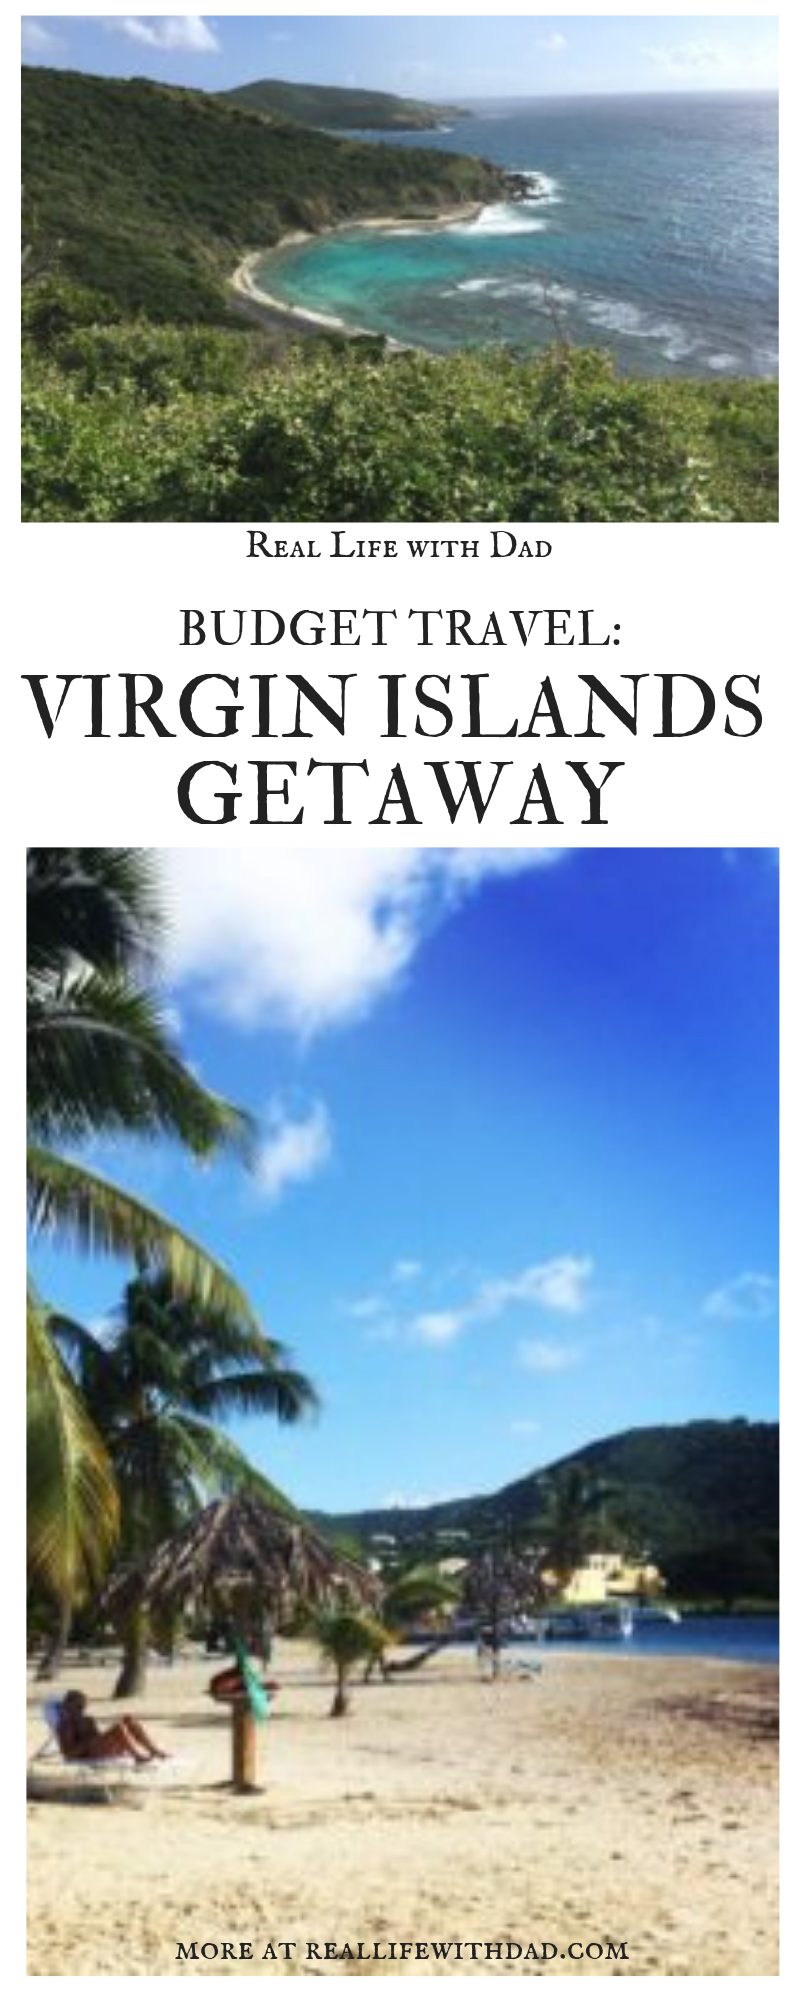 Virgin islands getaway | RealLifeWithDad.com